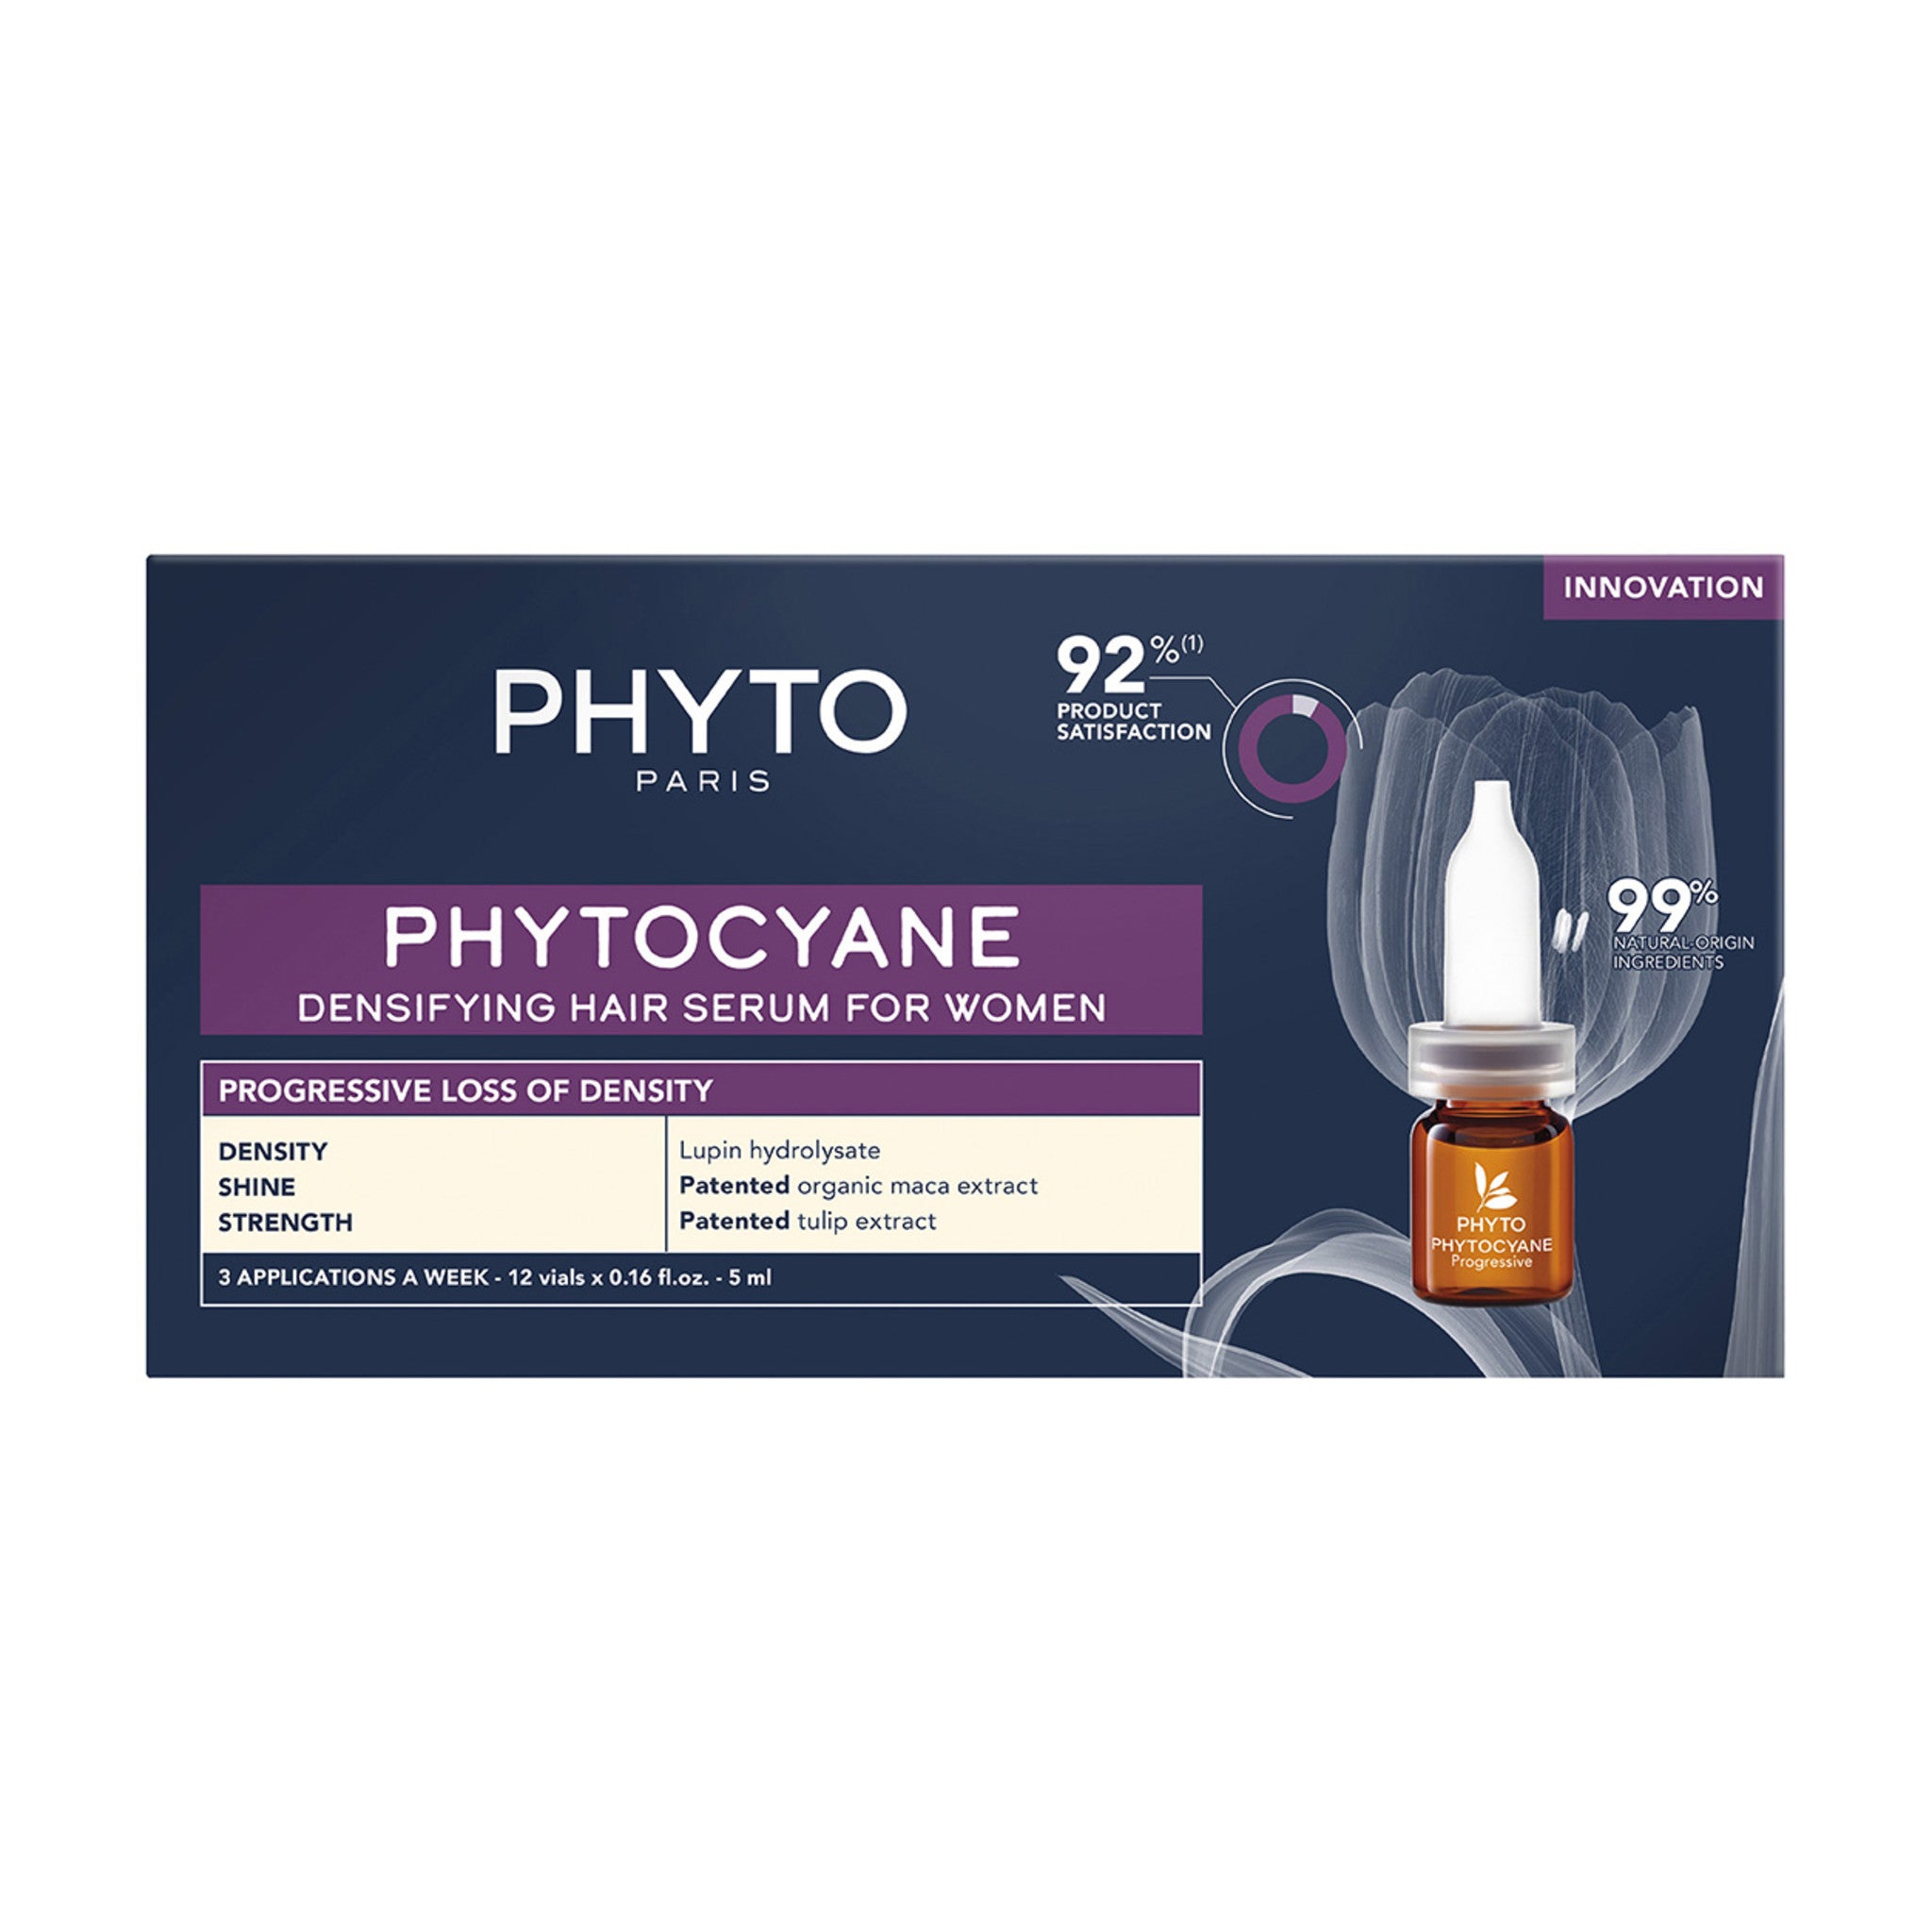 Phyto Phytocyane Anti Hair Loss Treatment for Women main image.